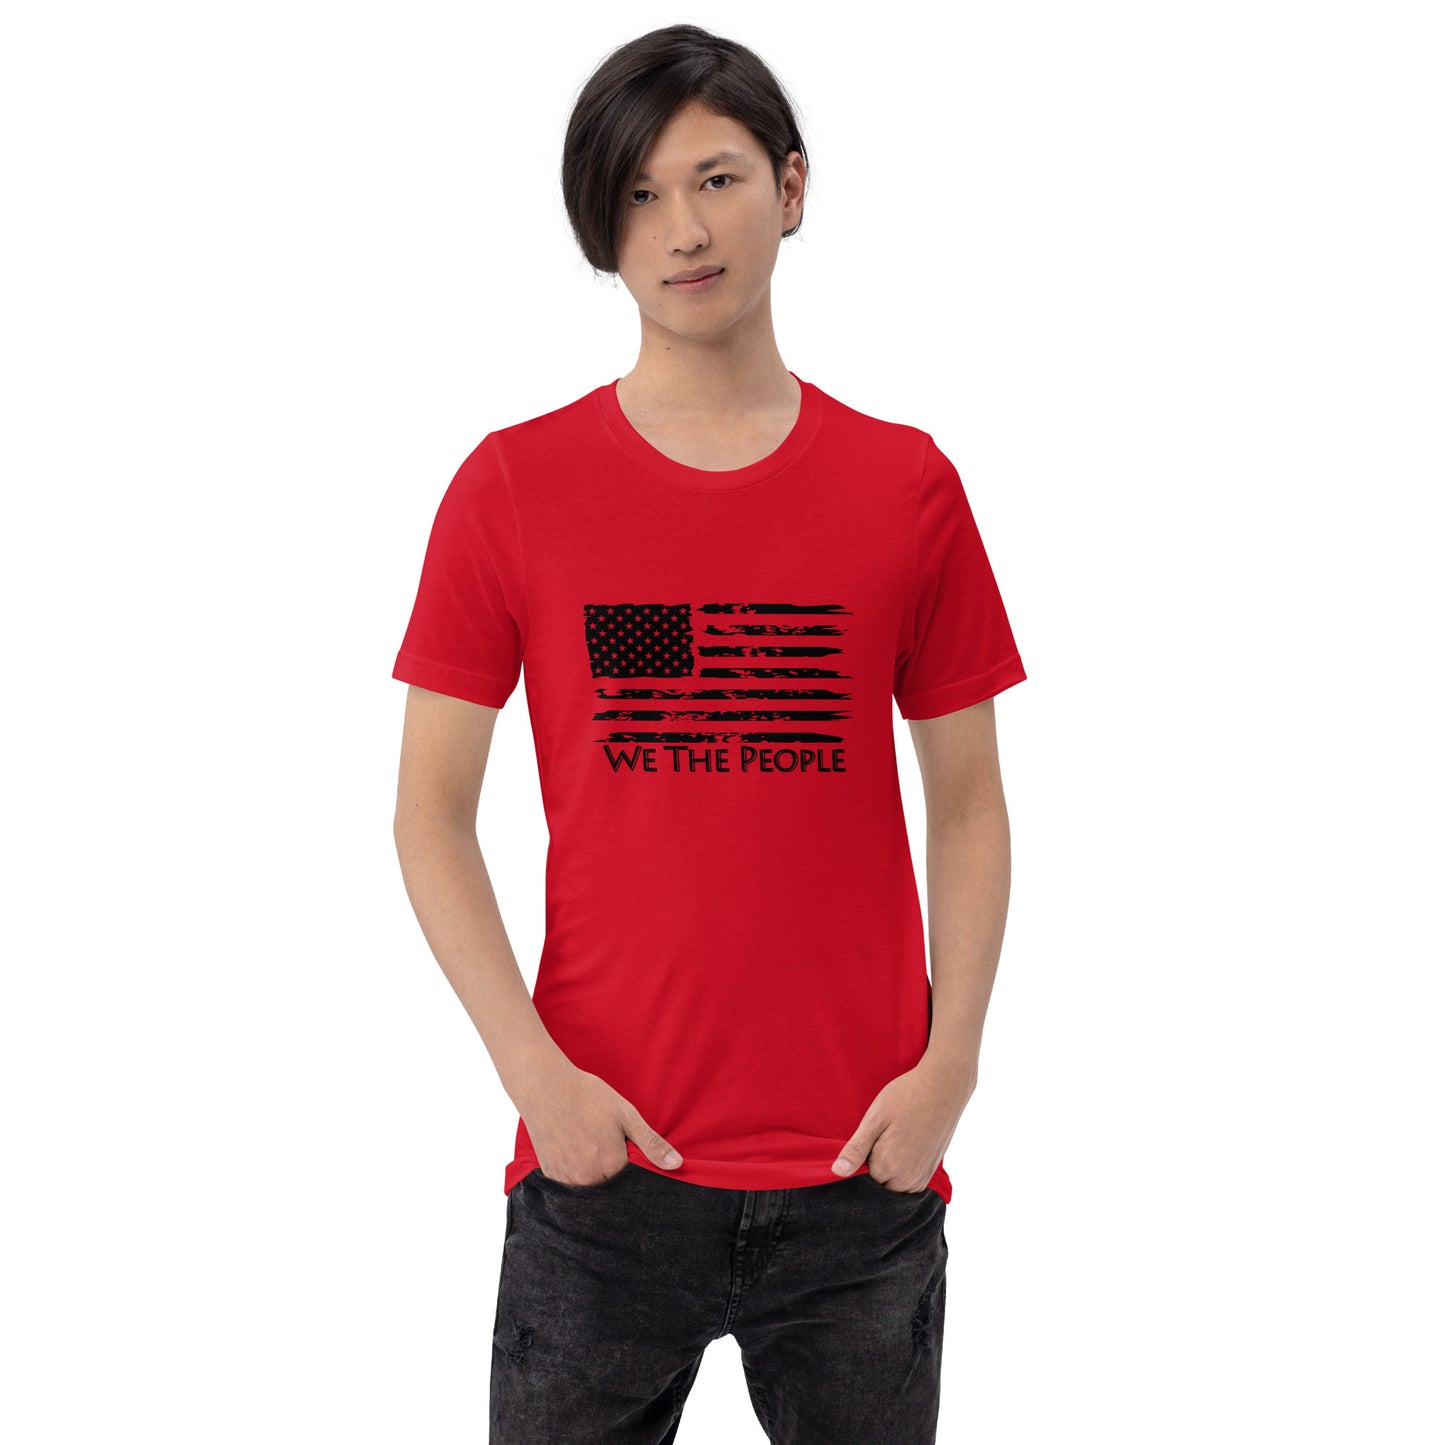 Eco-friendly made-to-order rustic flag t-shirt showcasing American pride